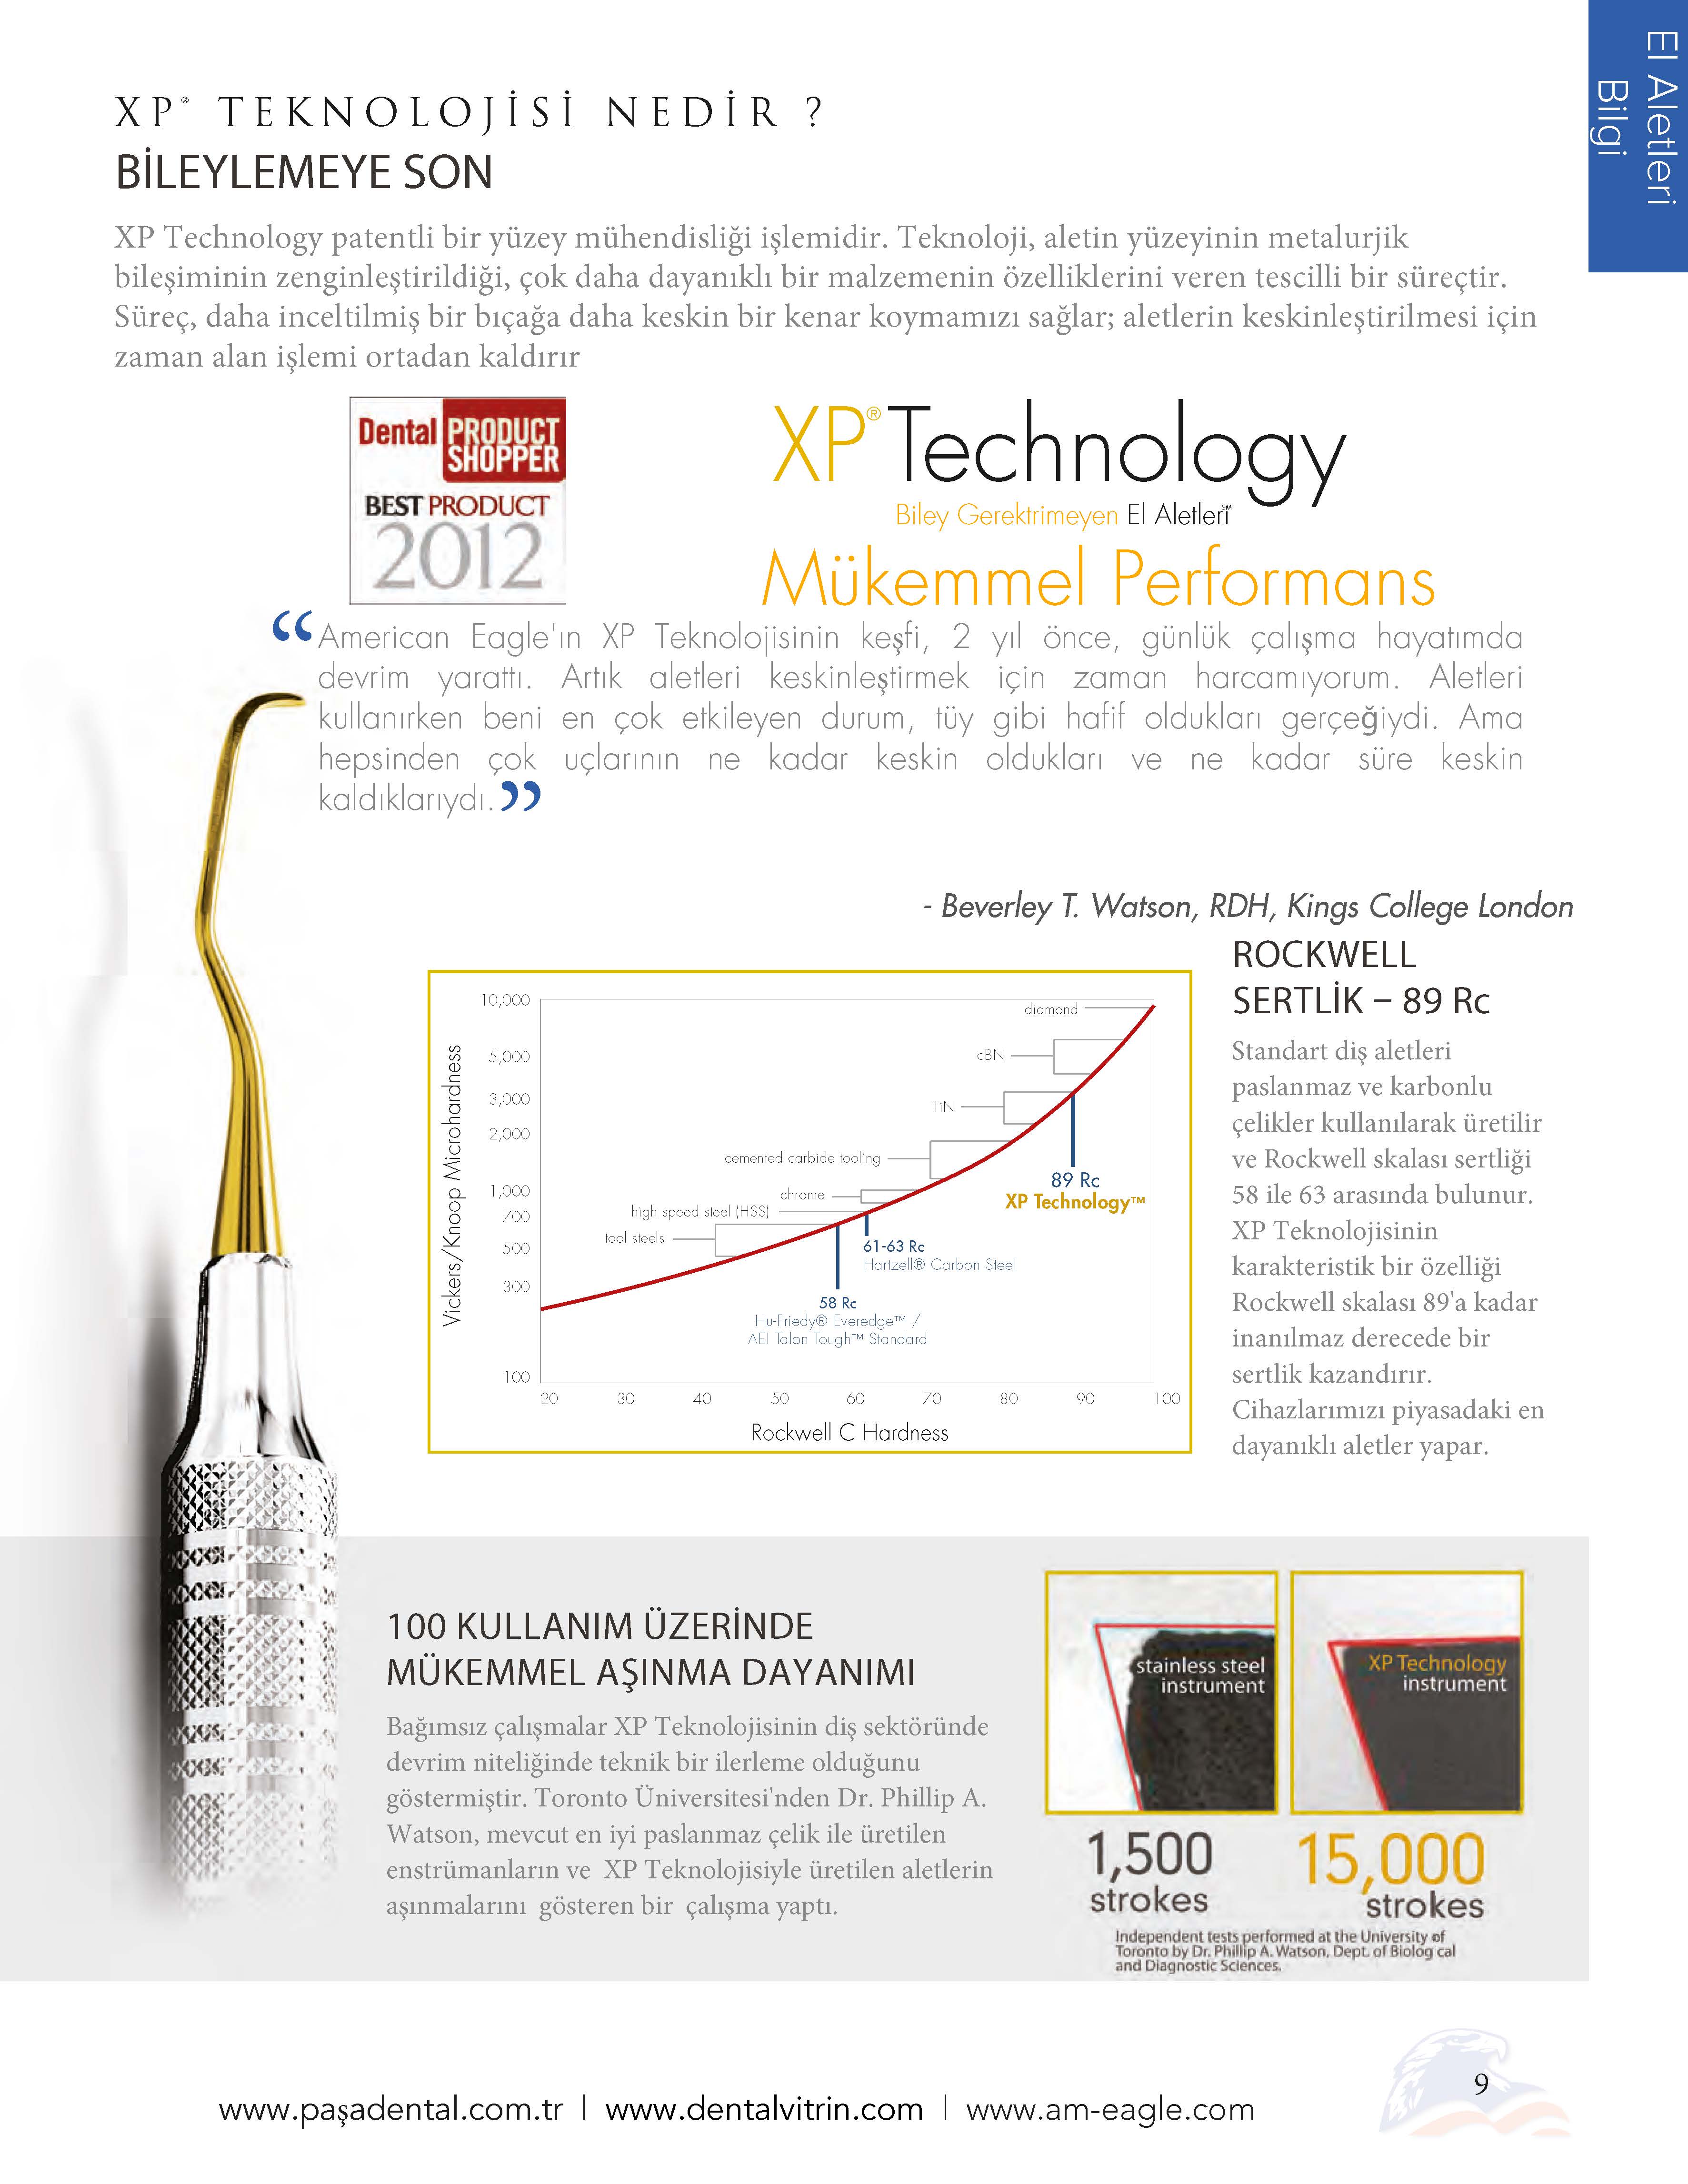 XP Teknolojisi Nedir Broşür
